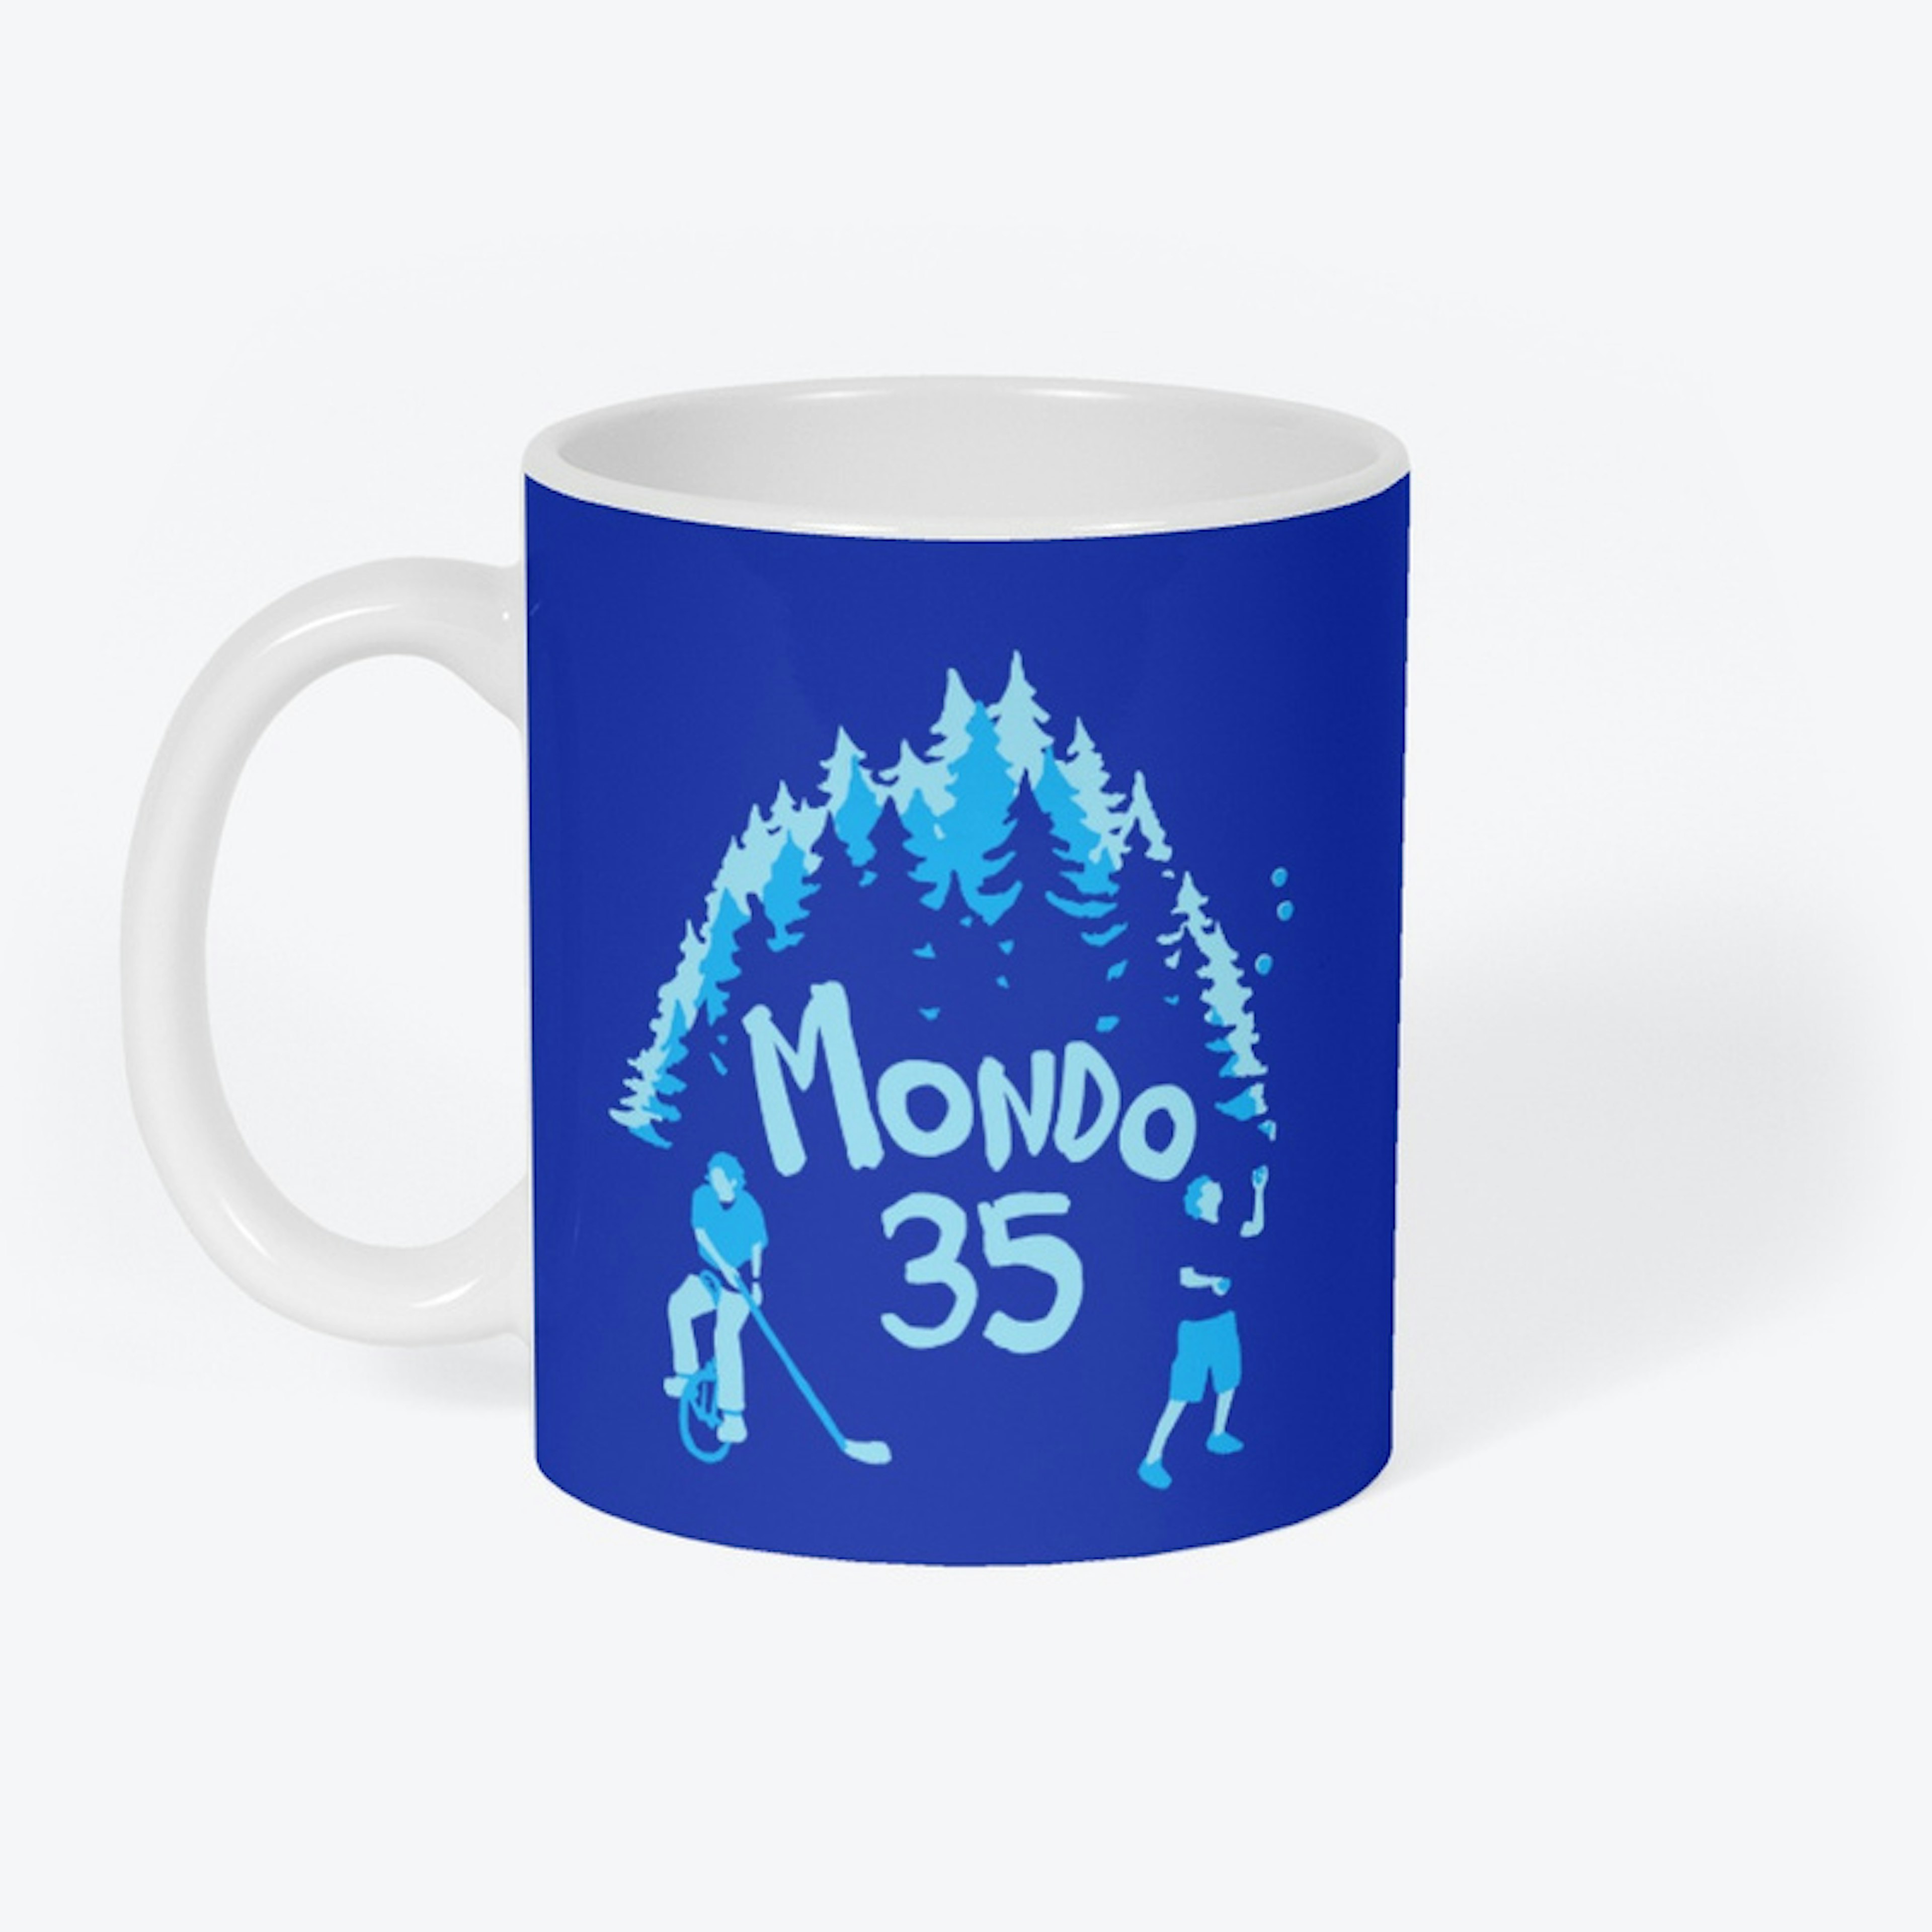 Mondo 35 Coffee Mug